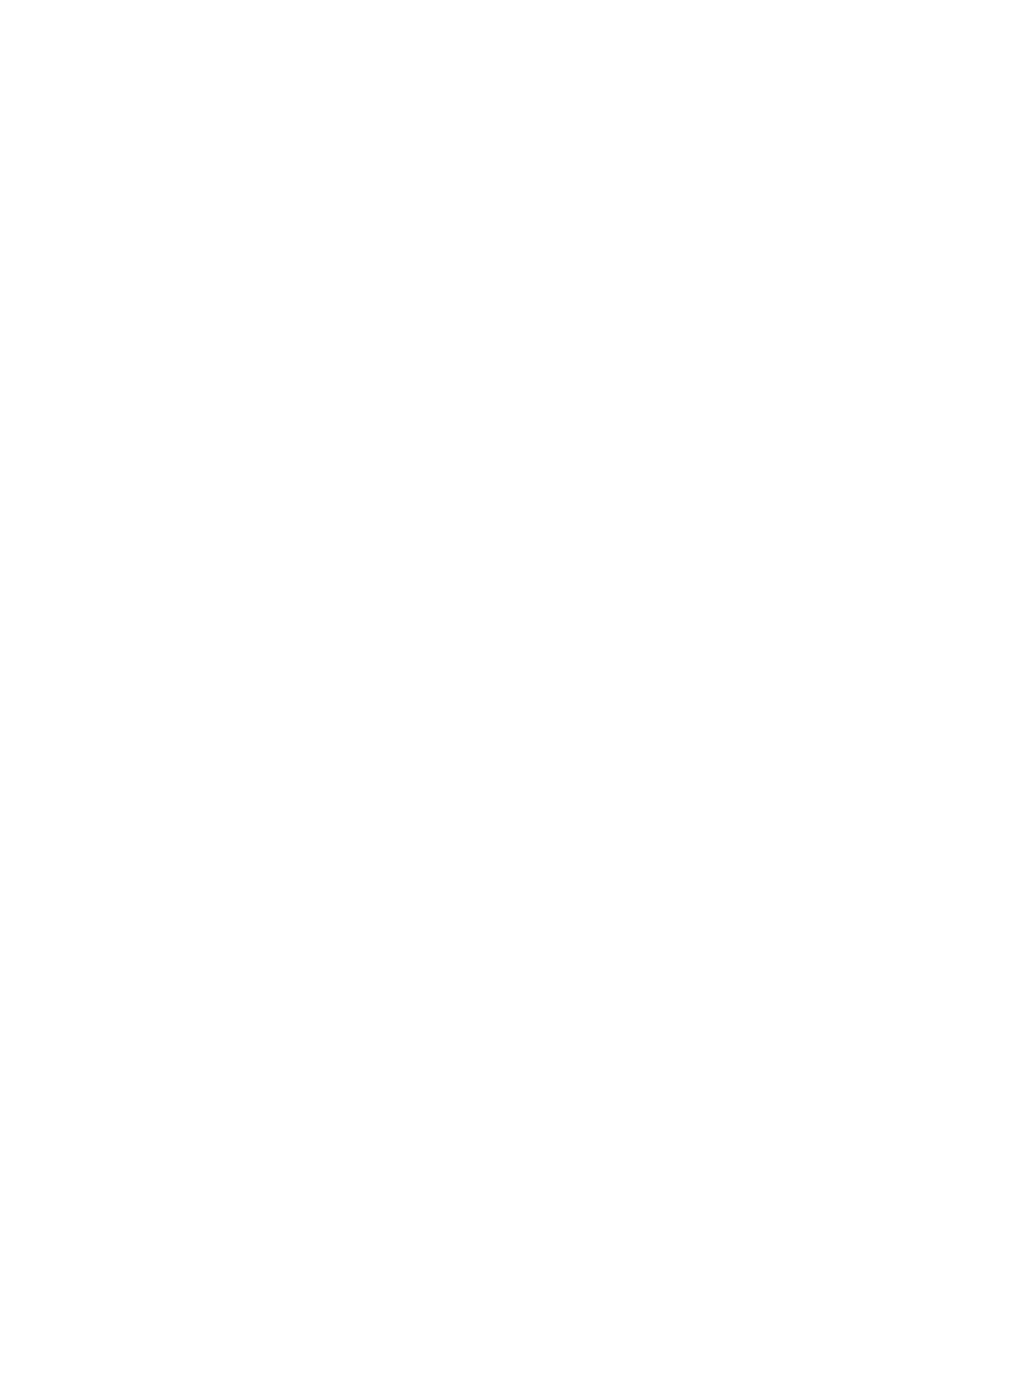 Fendler Seemuller architectes